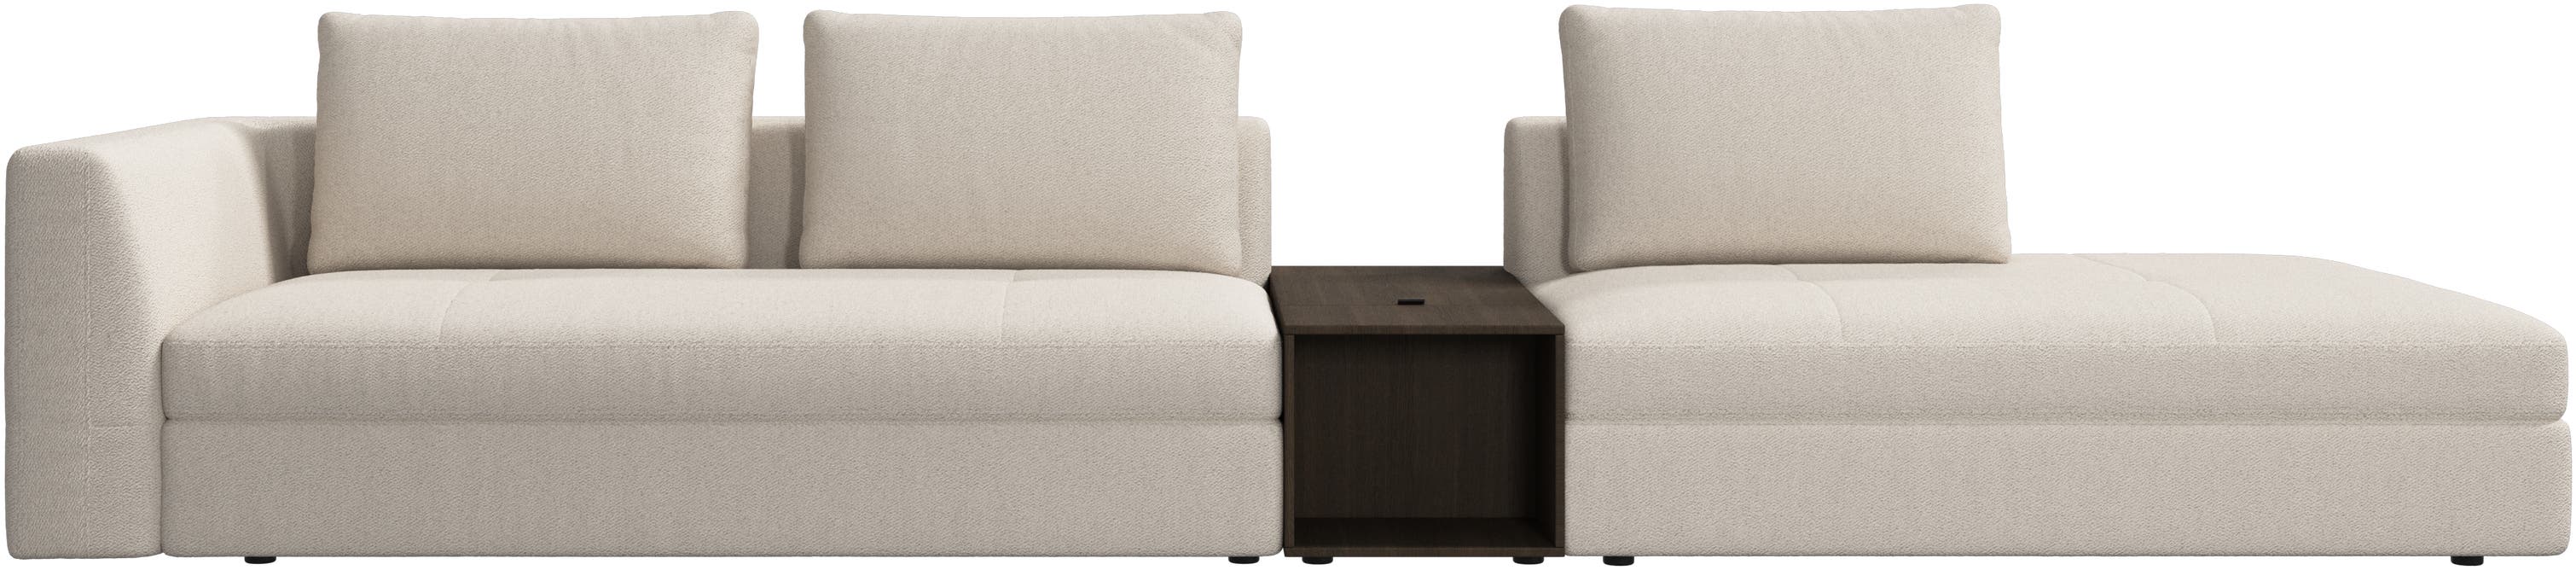 Bergamo 3-seater lounge sofa with storage